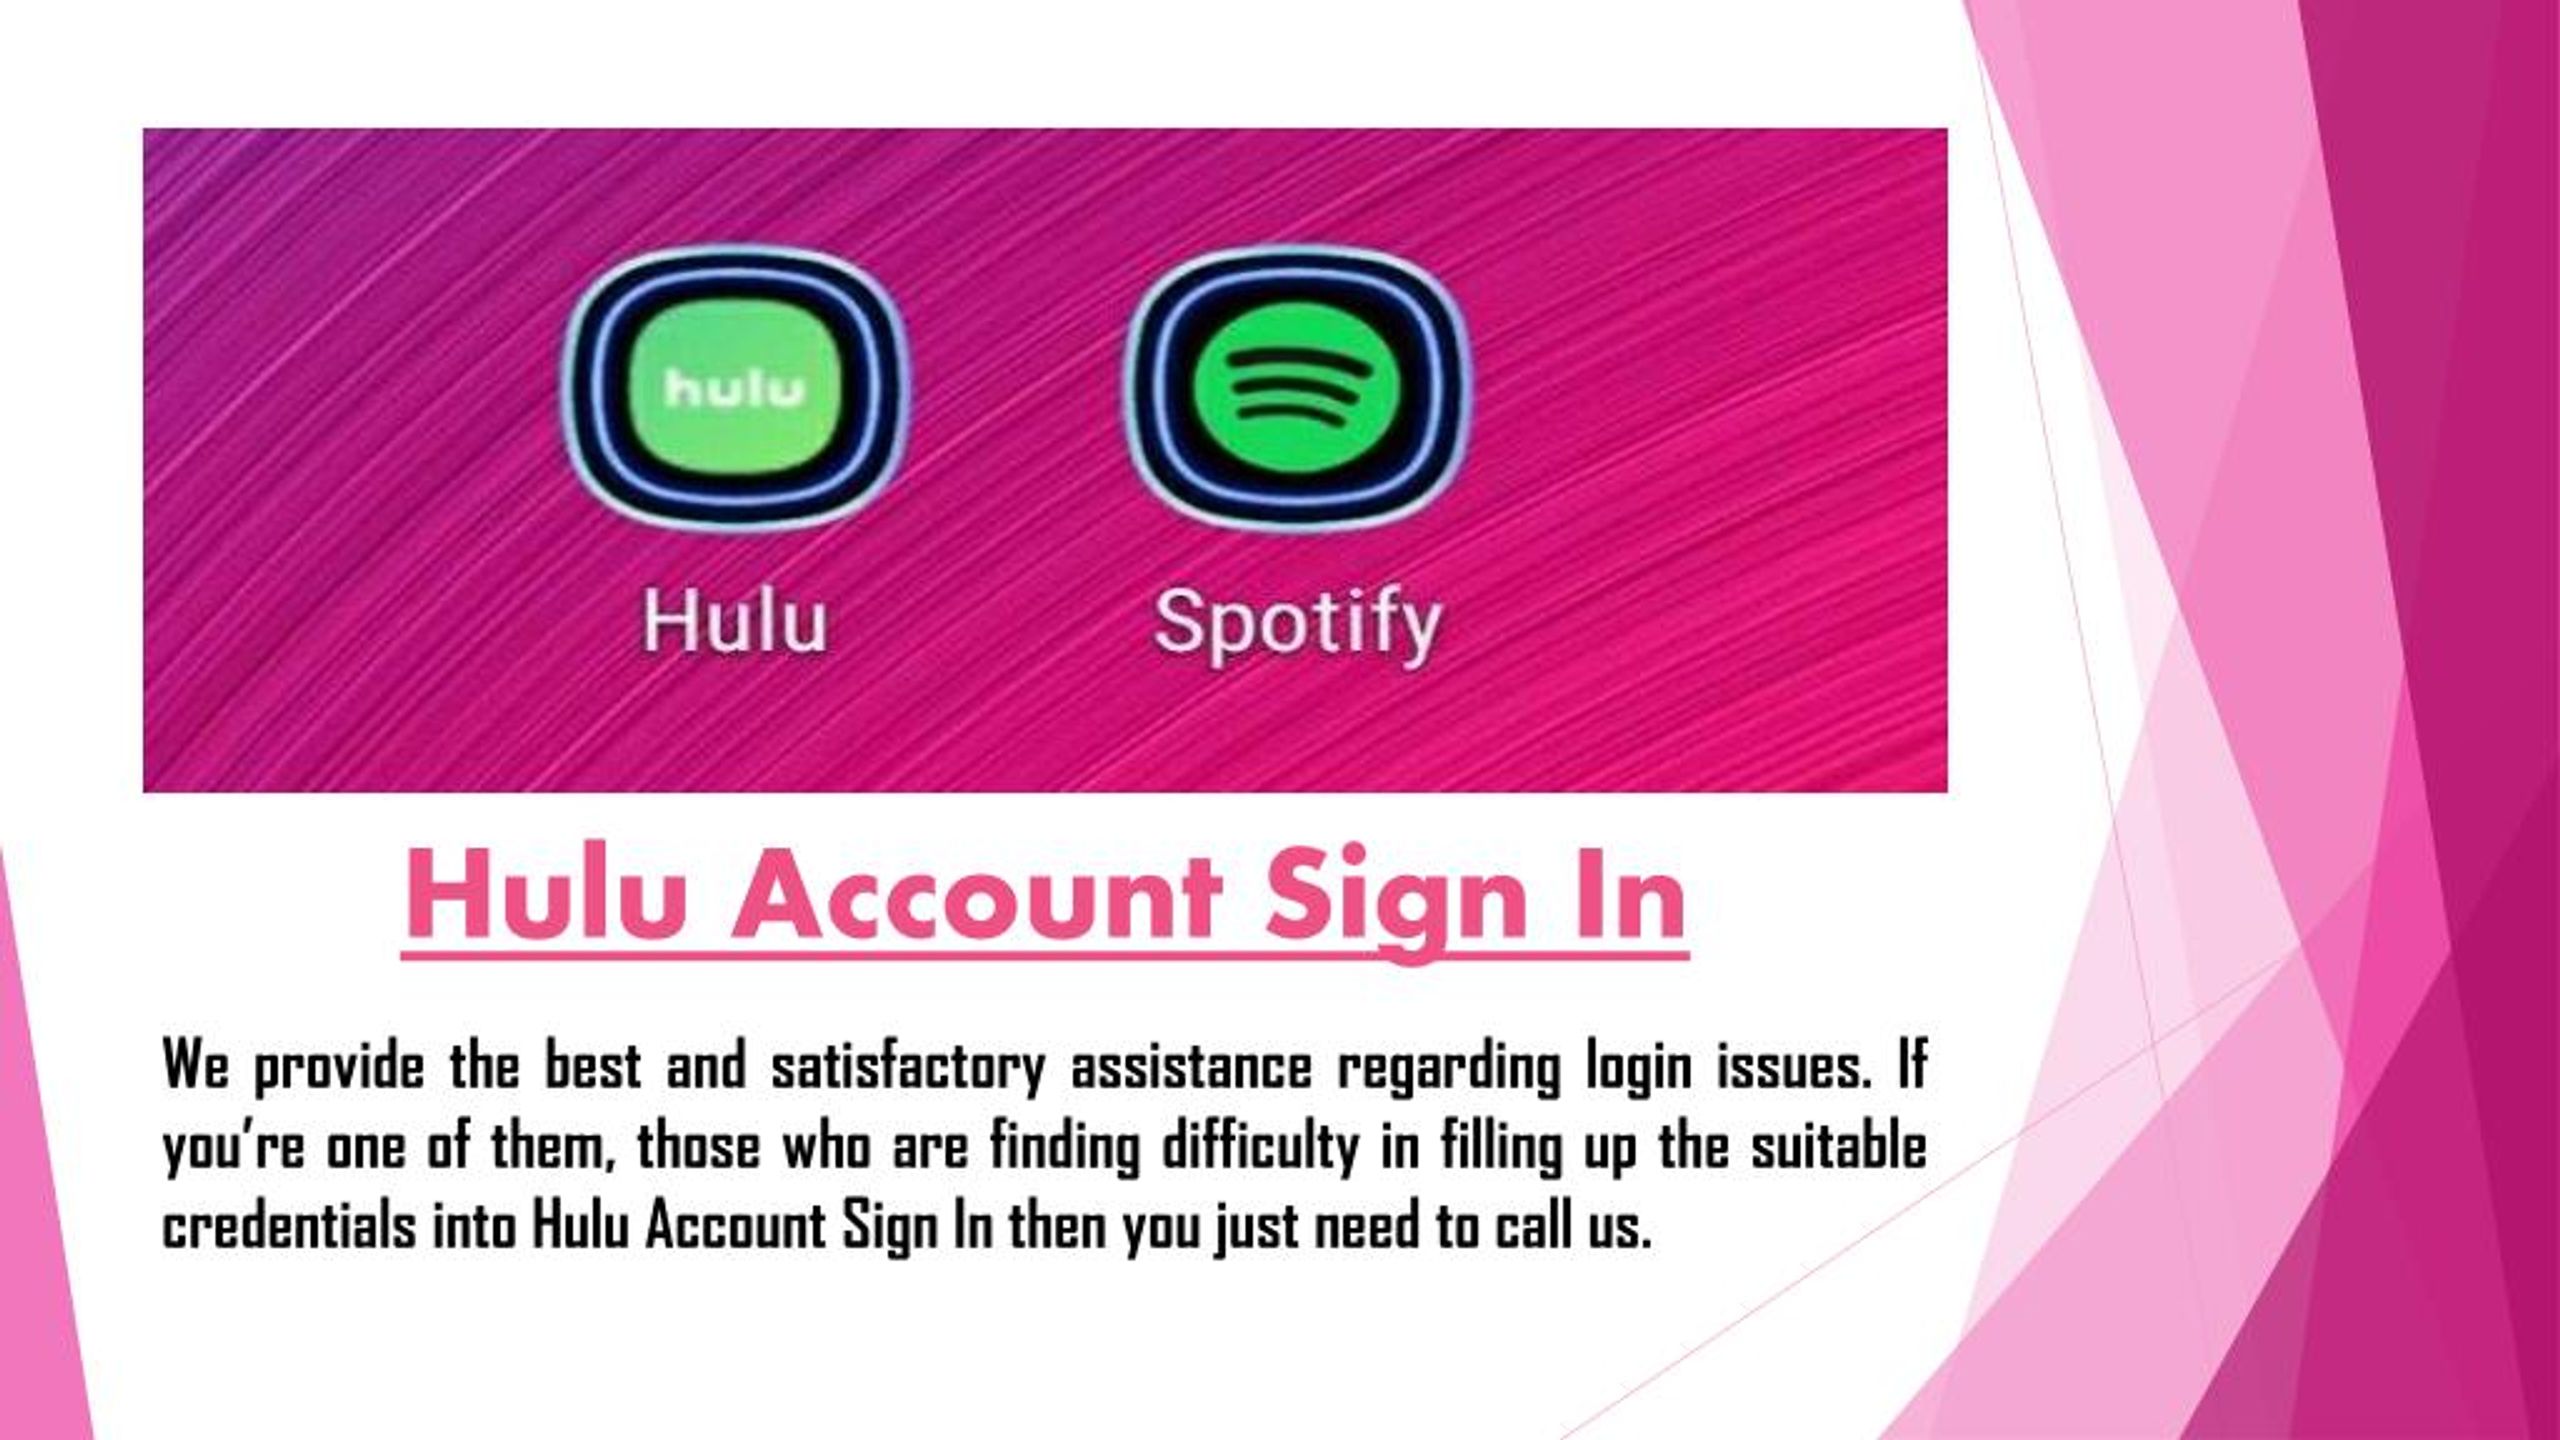 log in to hulu with spotify